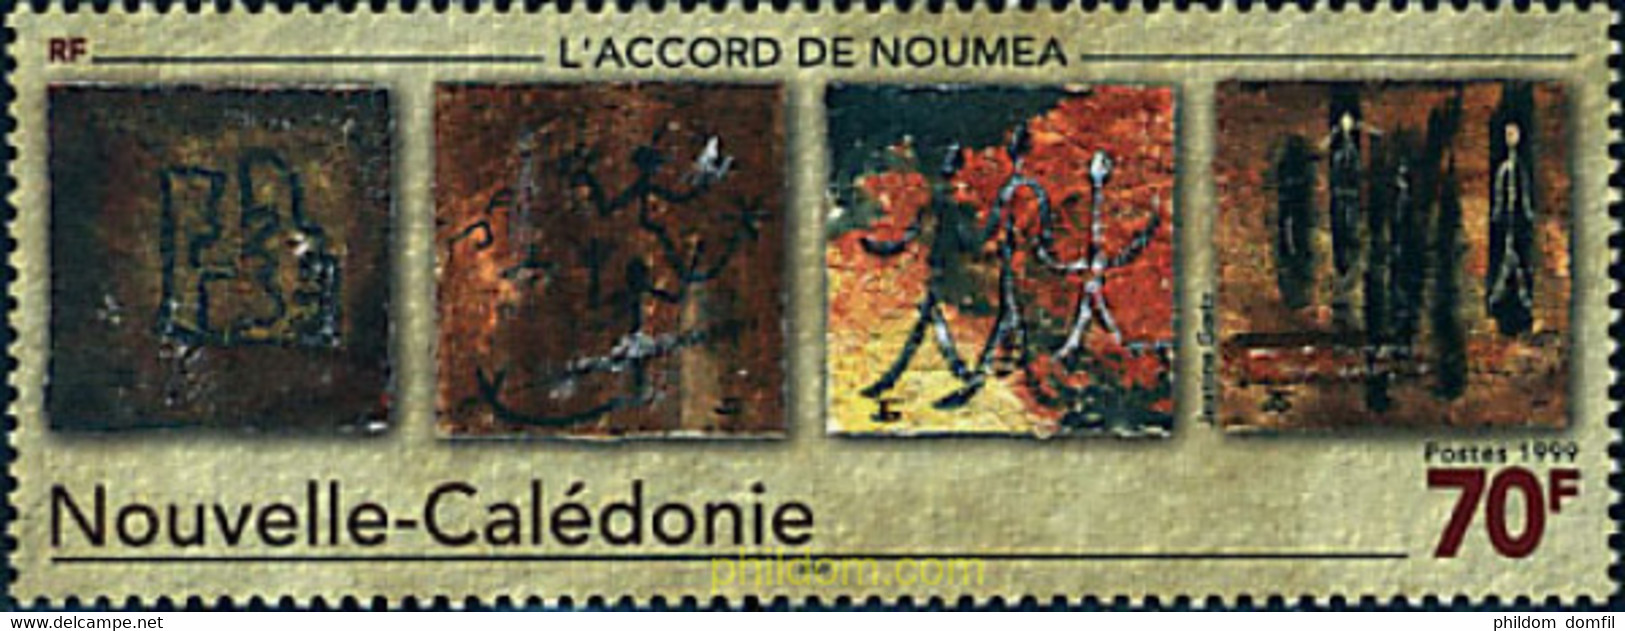 67933 MNH NUEVA CALEDONIA 1999 ACUERDO DE NOUMEA - Gebraucht